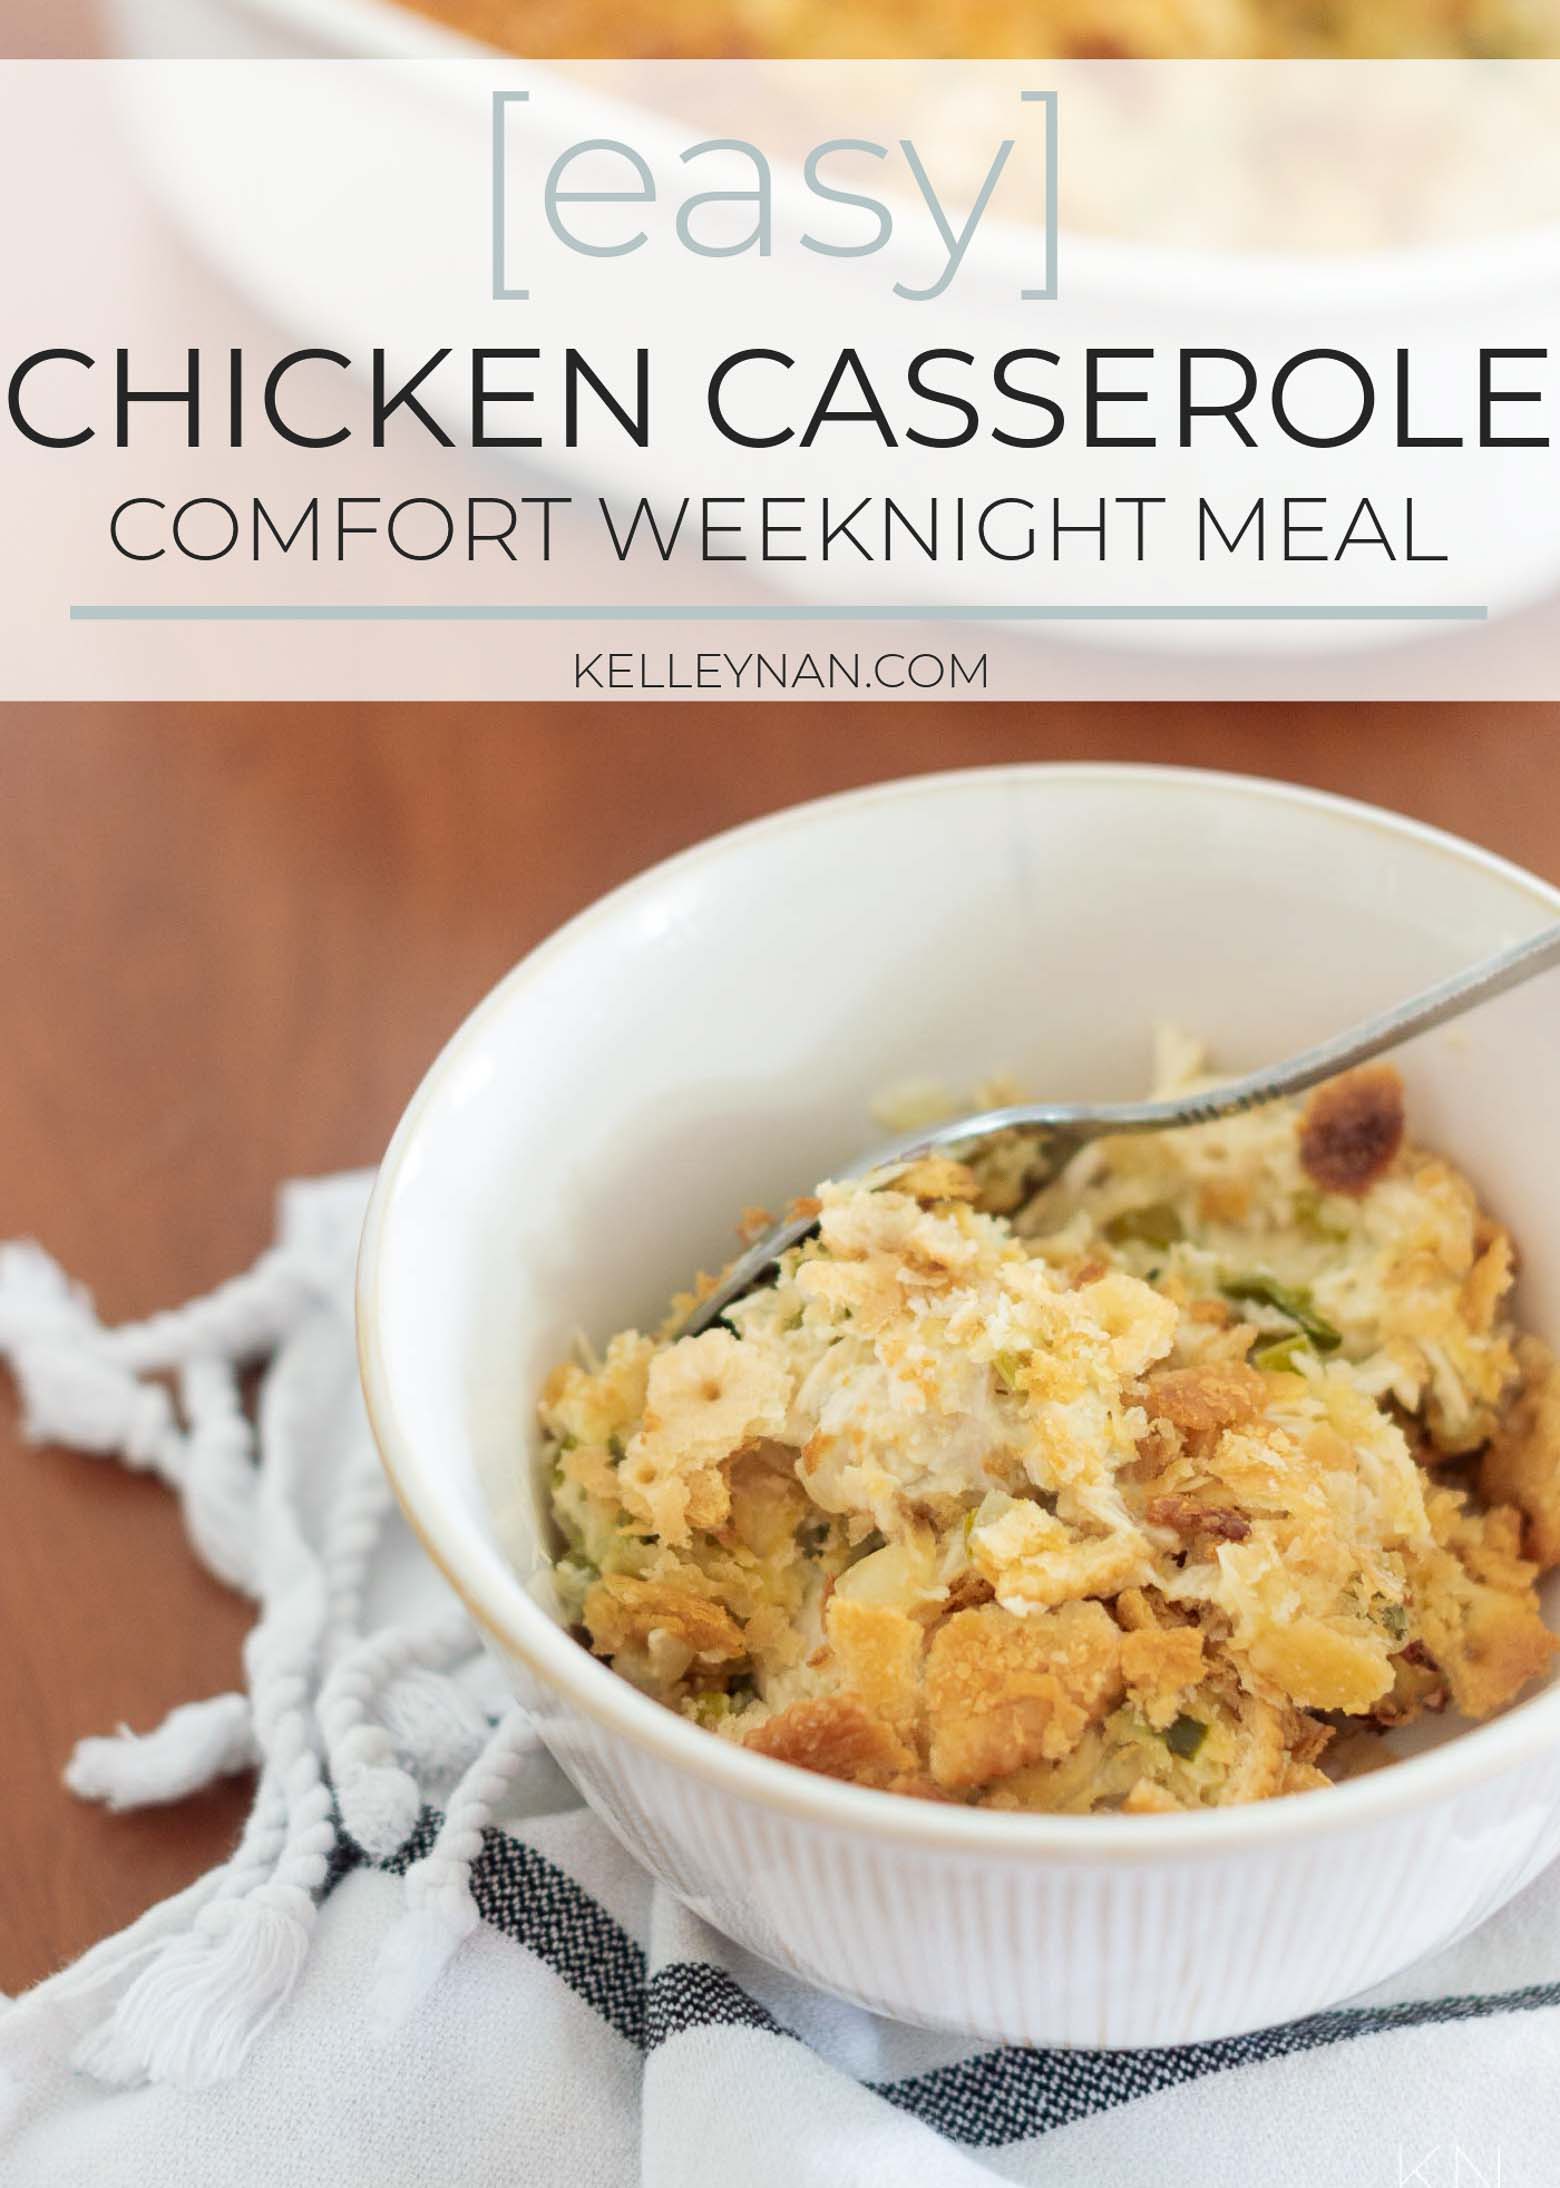 Weeknight Dinner Idea: Easy Chicken Casserole with Ritz Cracker Topping